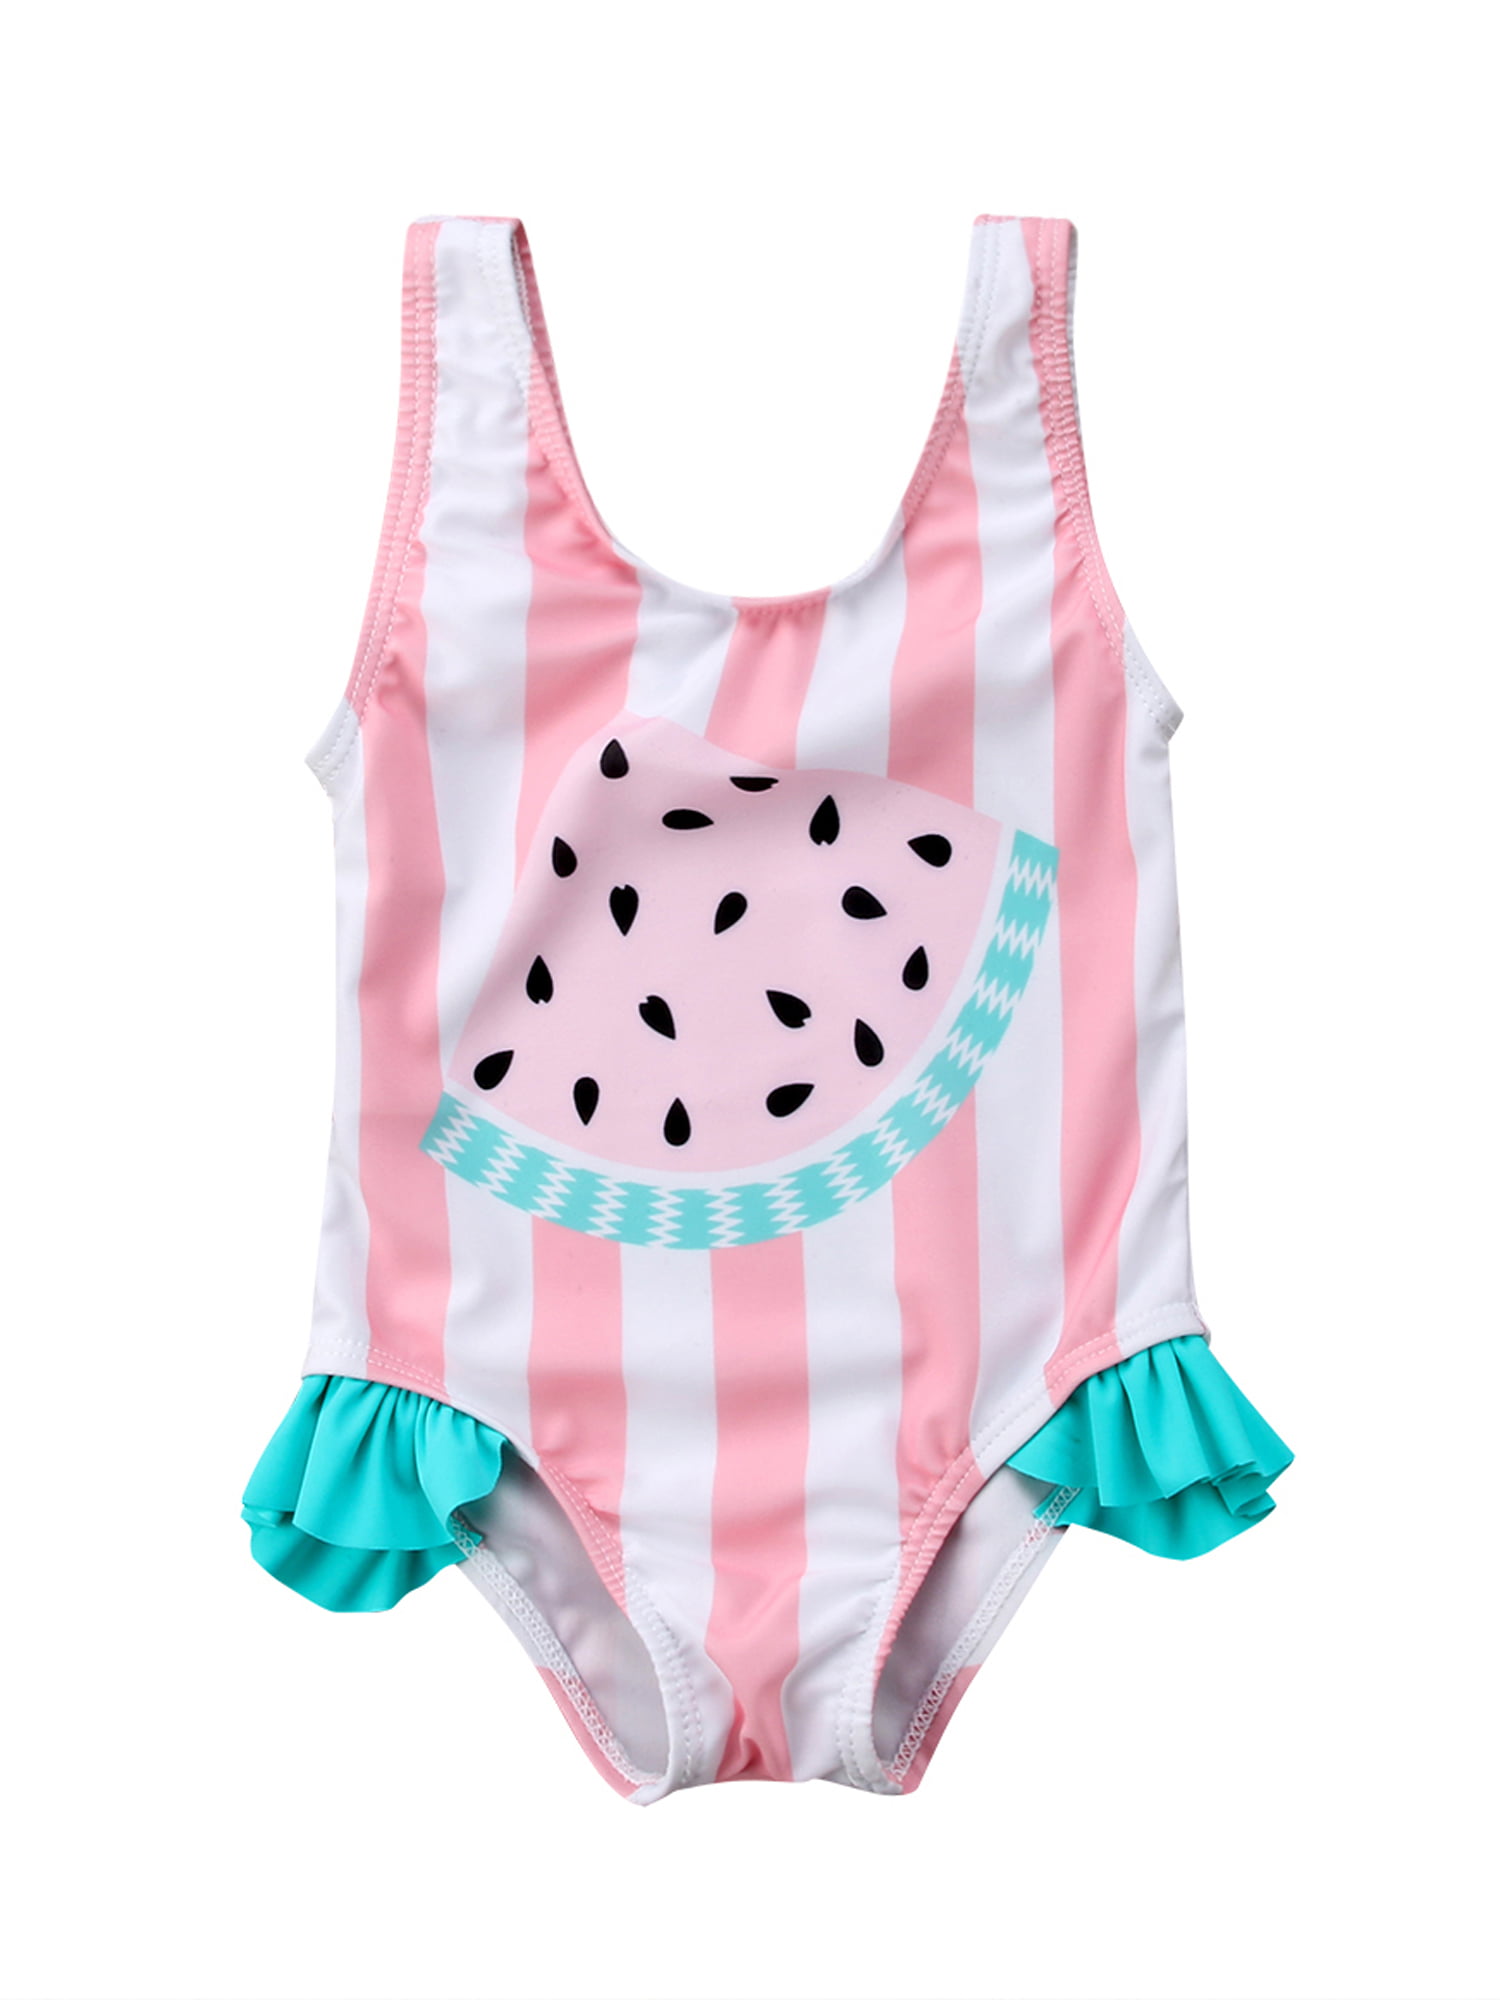 Calsunbaby - Calsunbaby Toddler Kids Baby Girls Watermelon Swimsuit ...